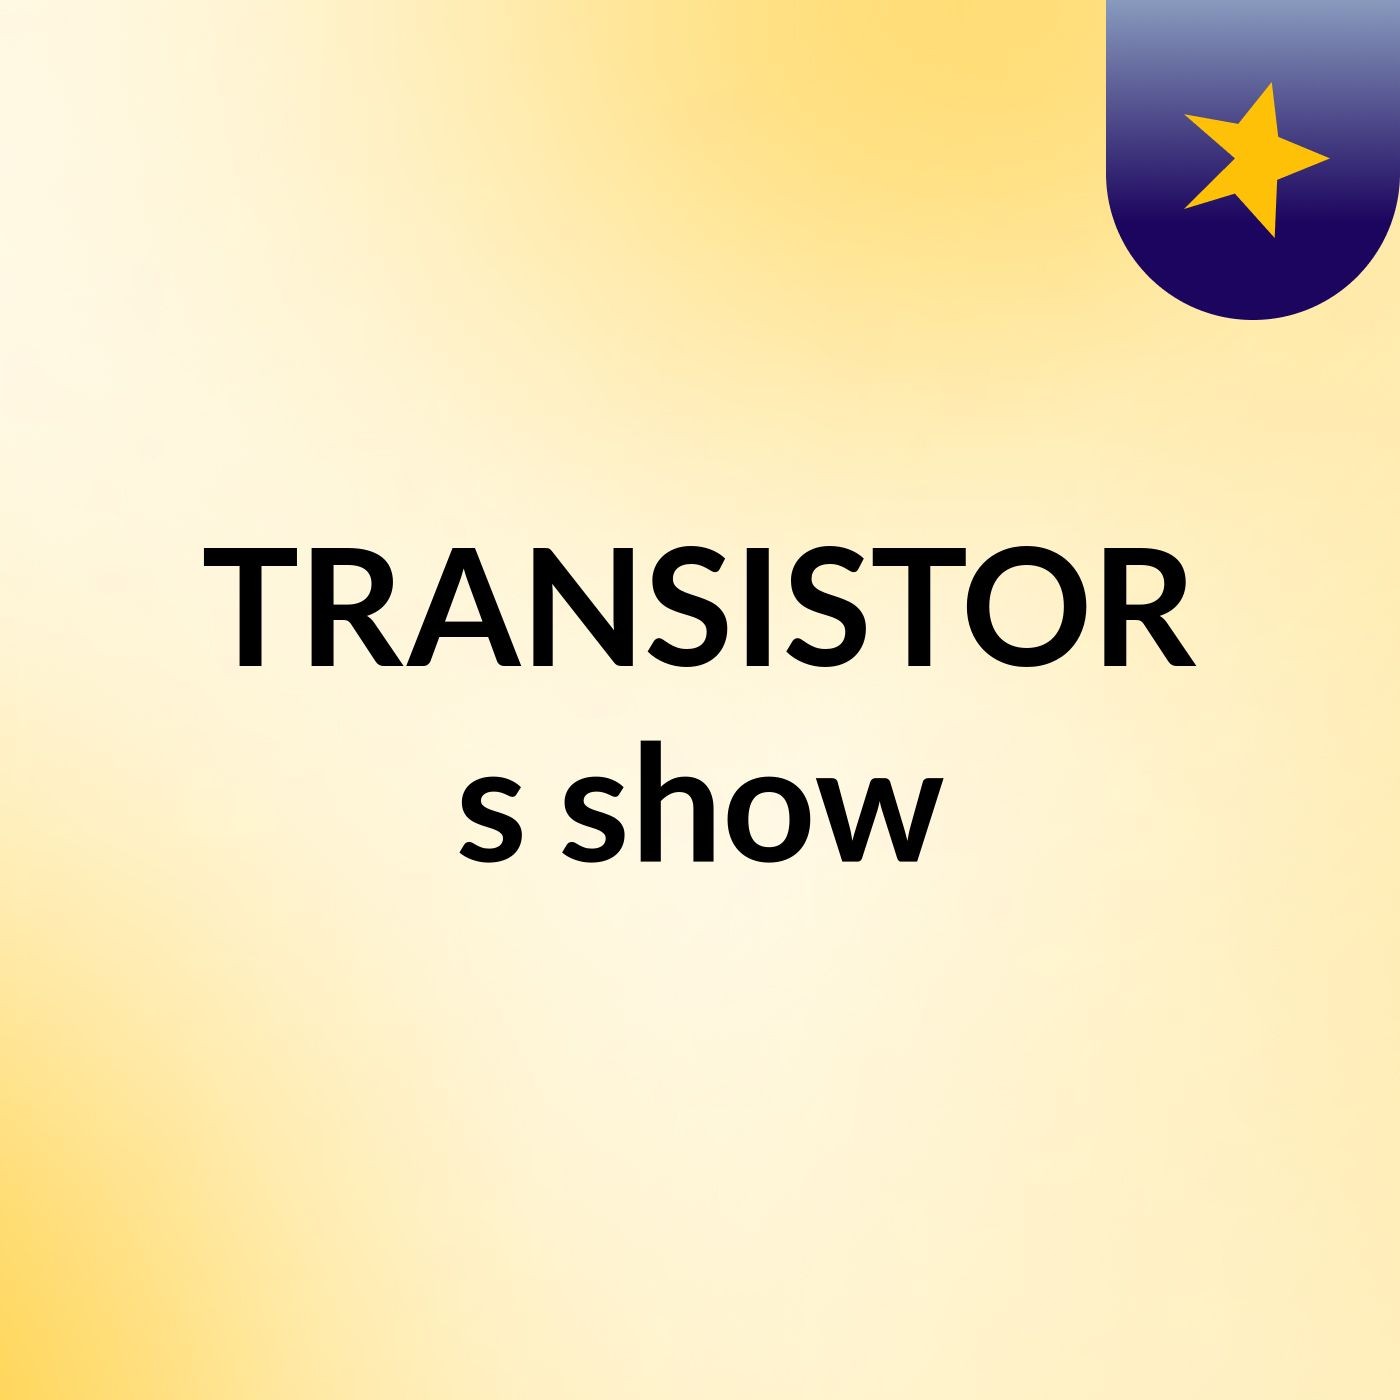 TRANSISTOR's show